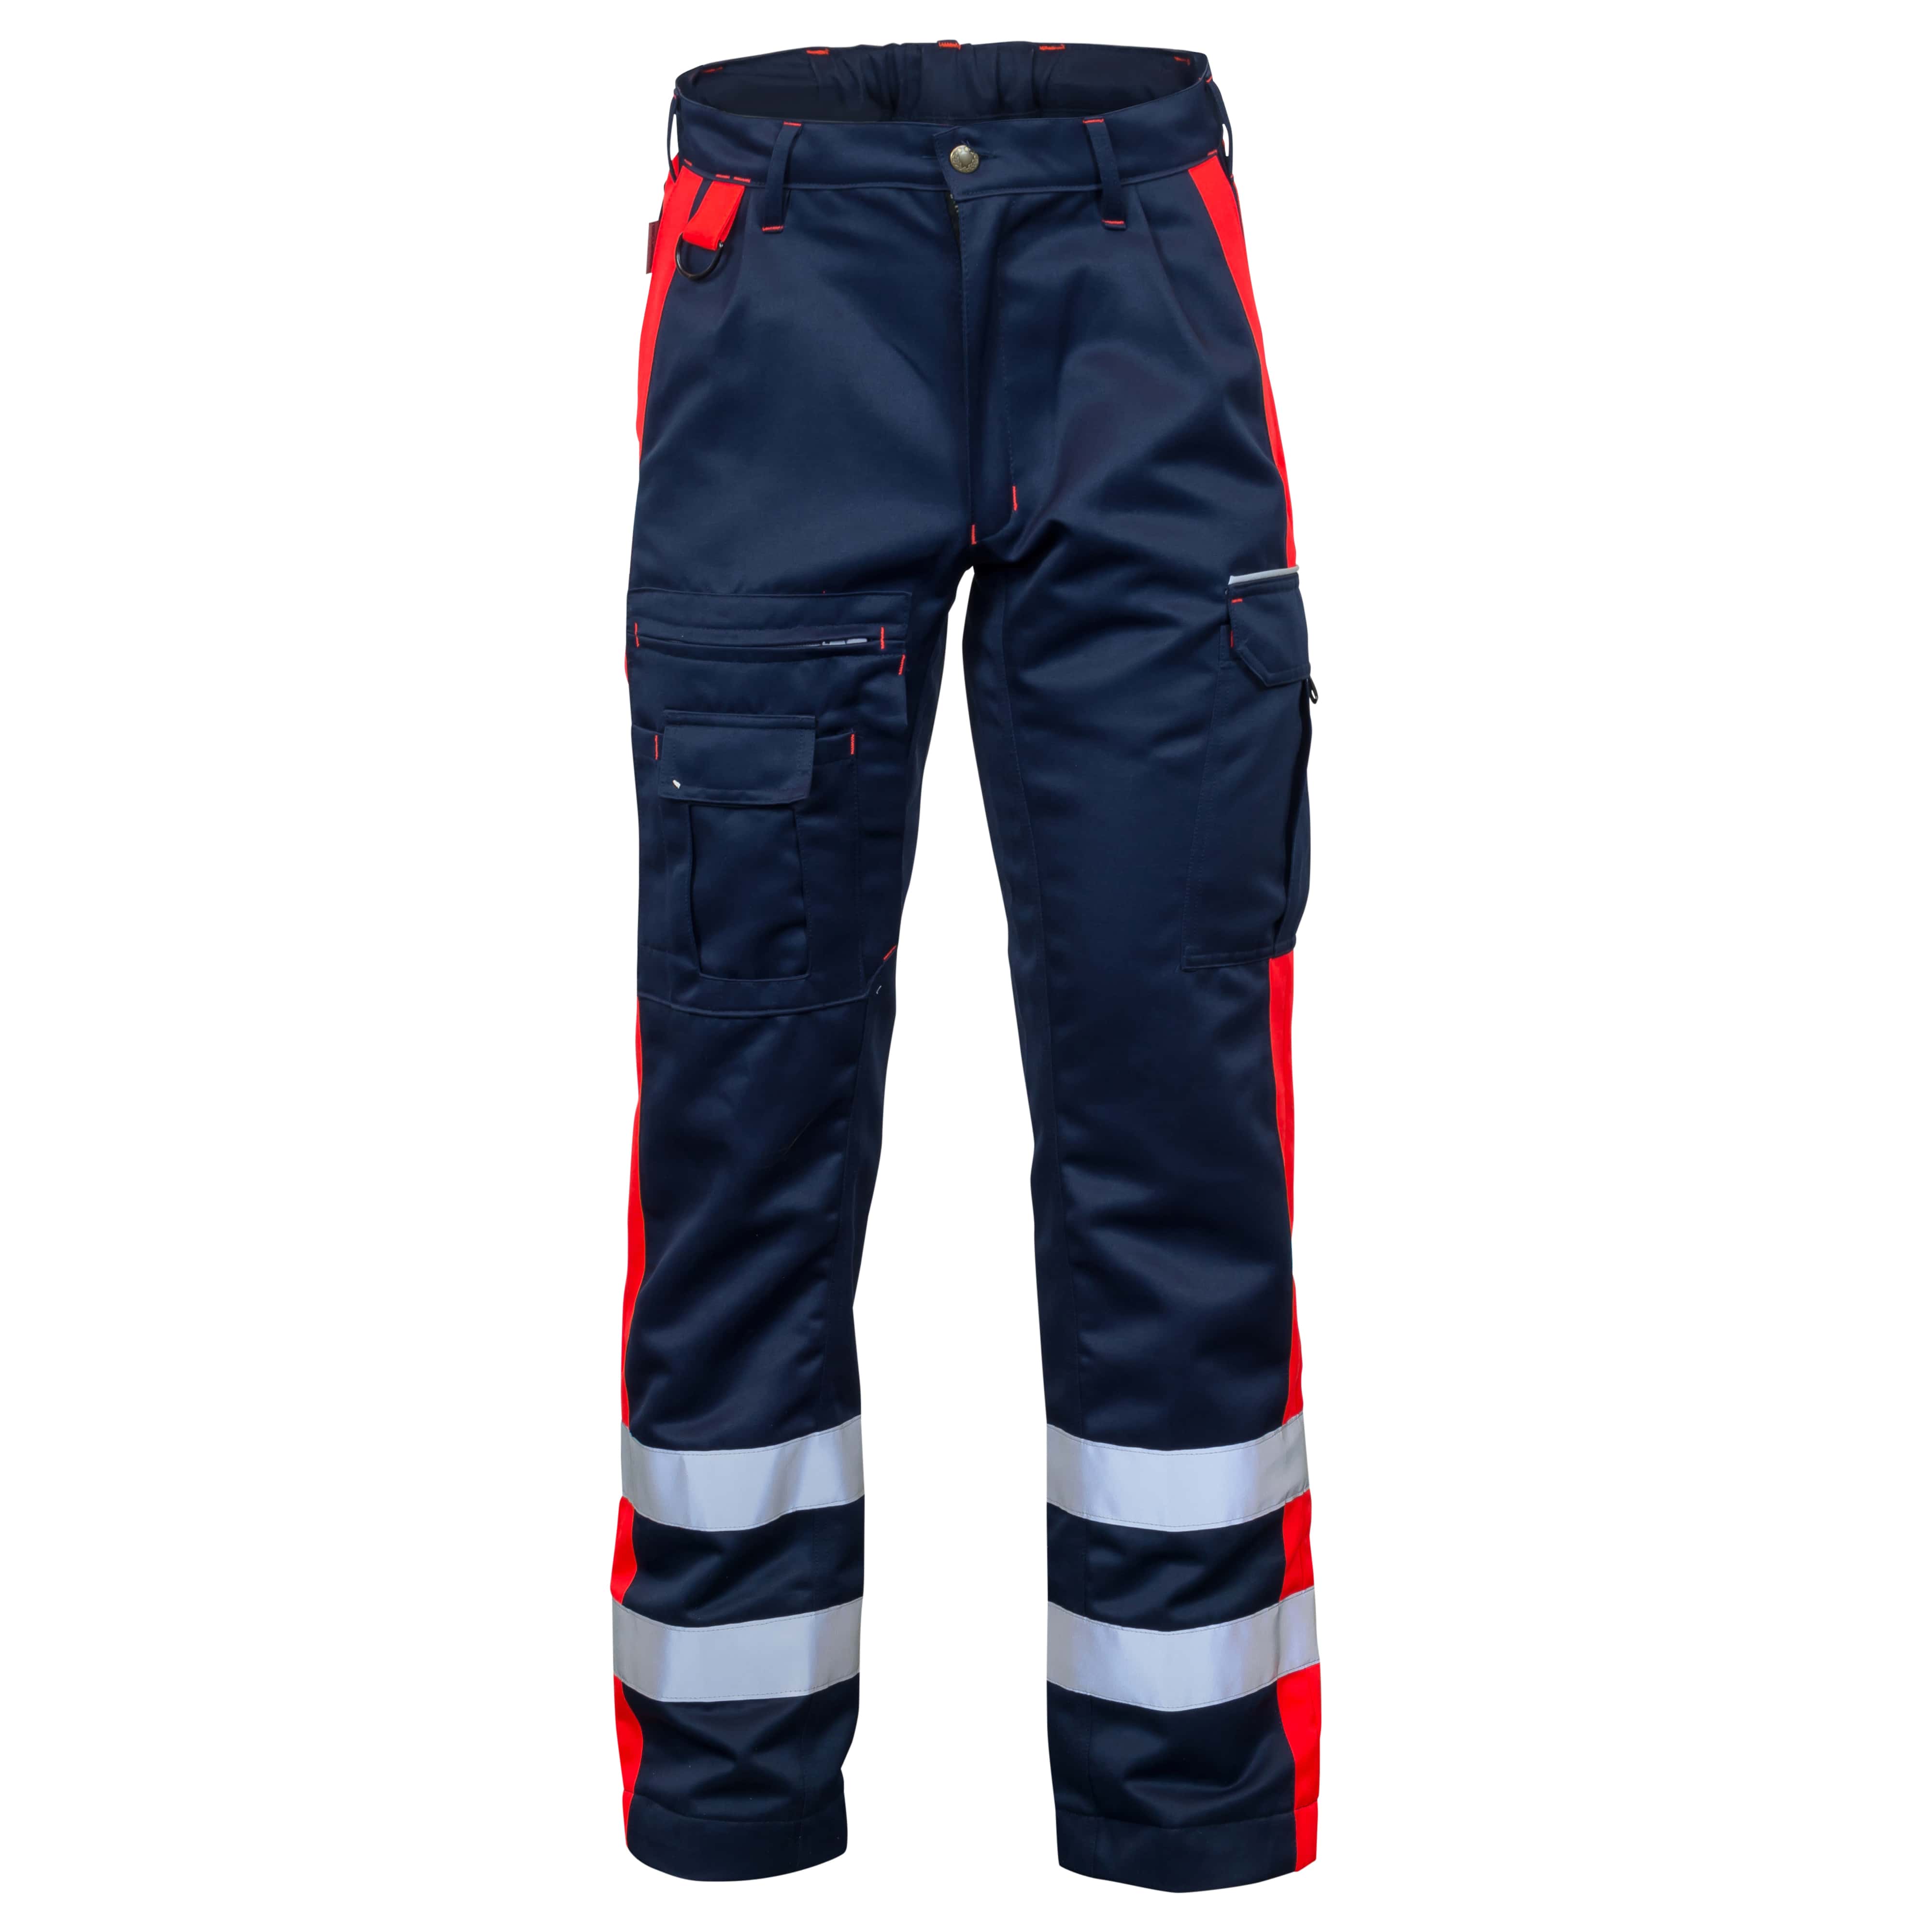 Rescuewear Unisex Hose 33416 Marineblau / Neon Rot